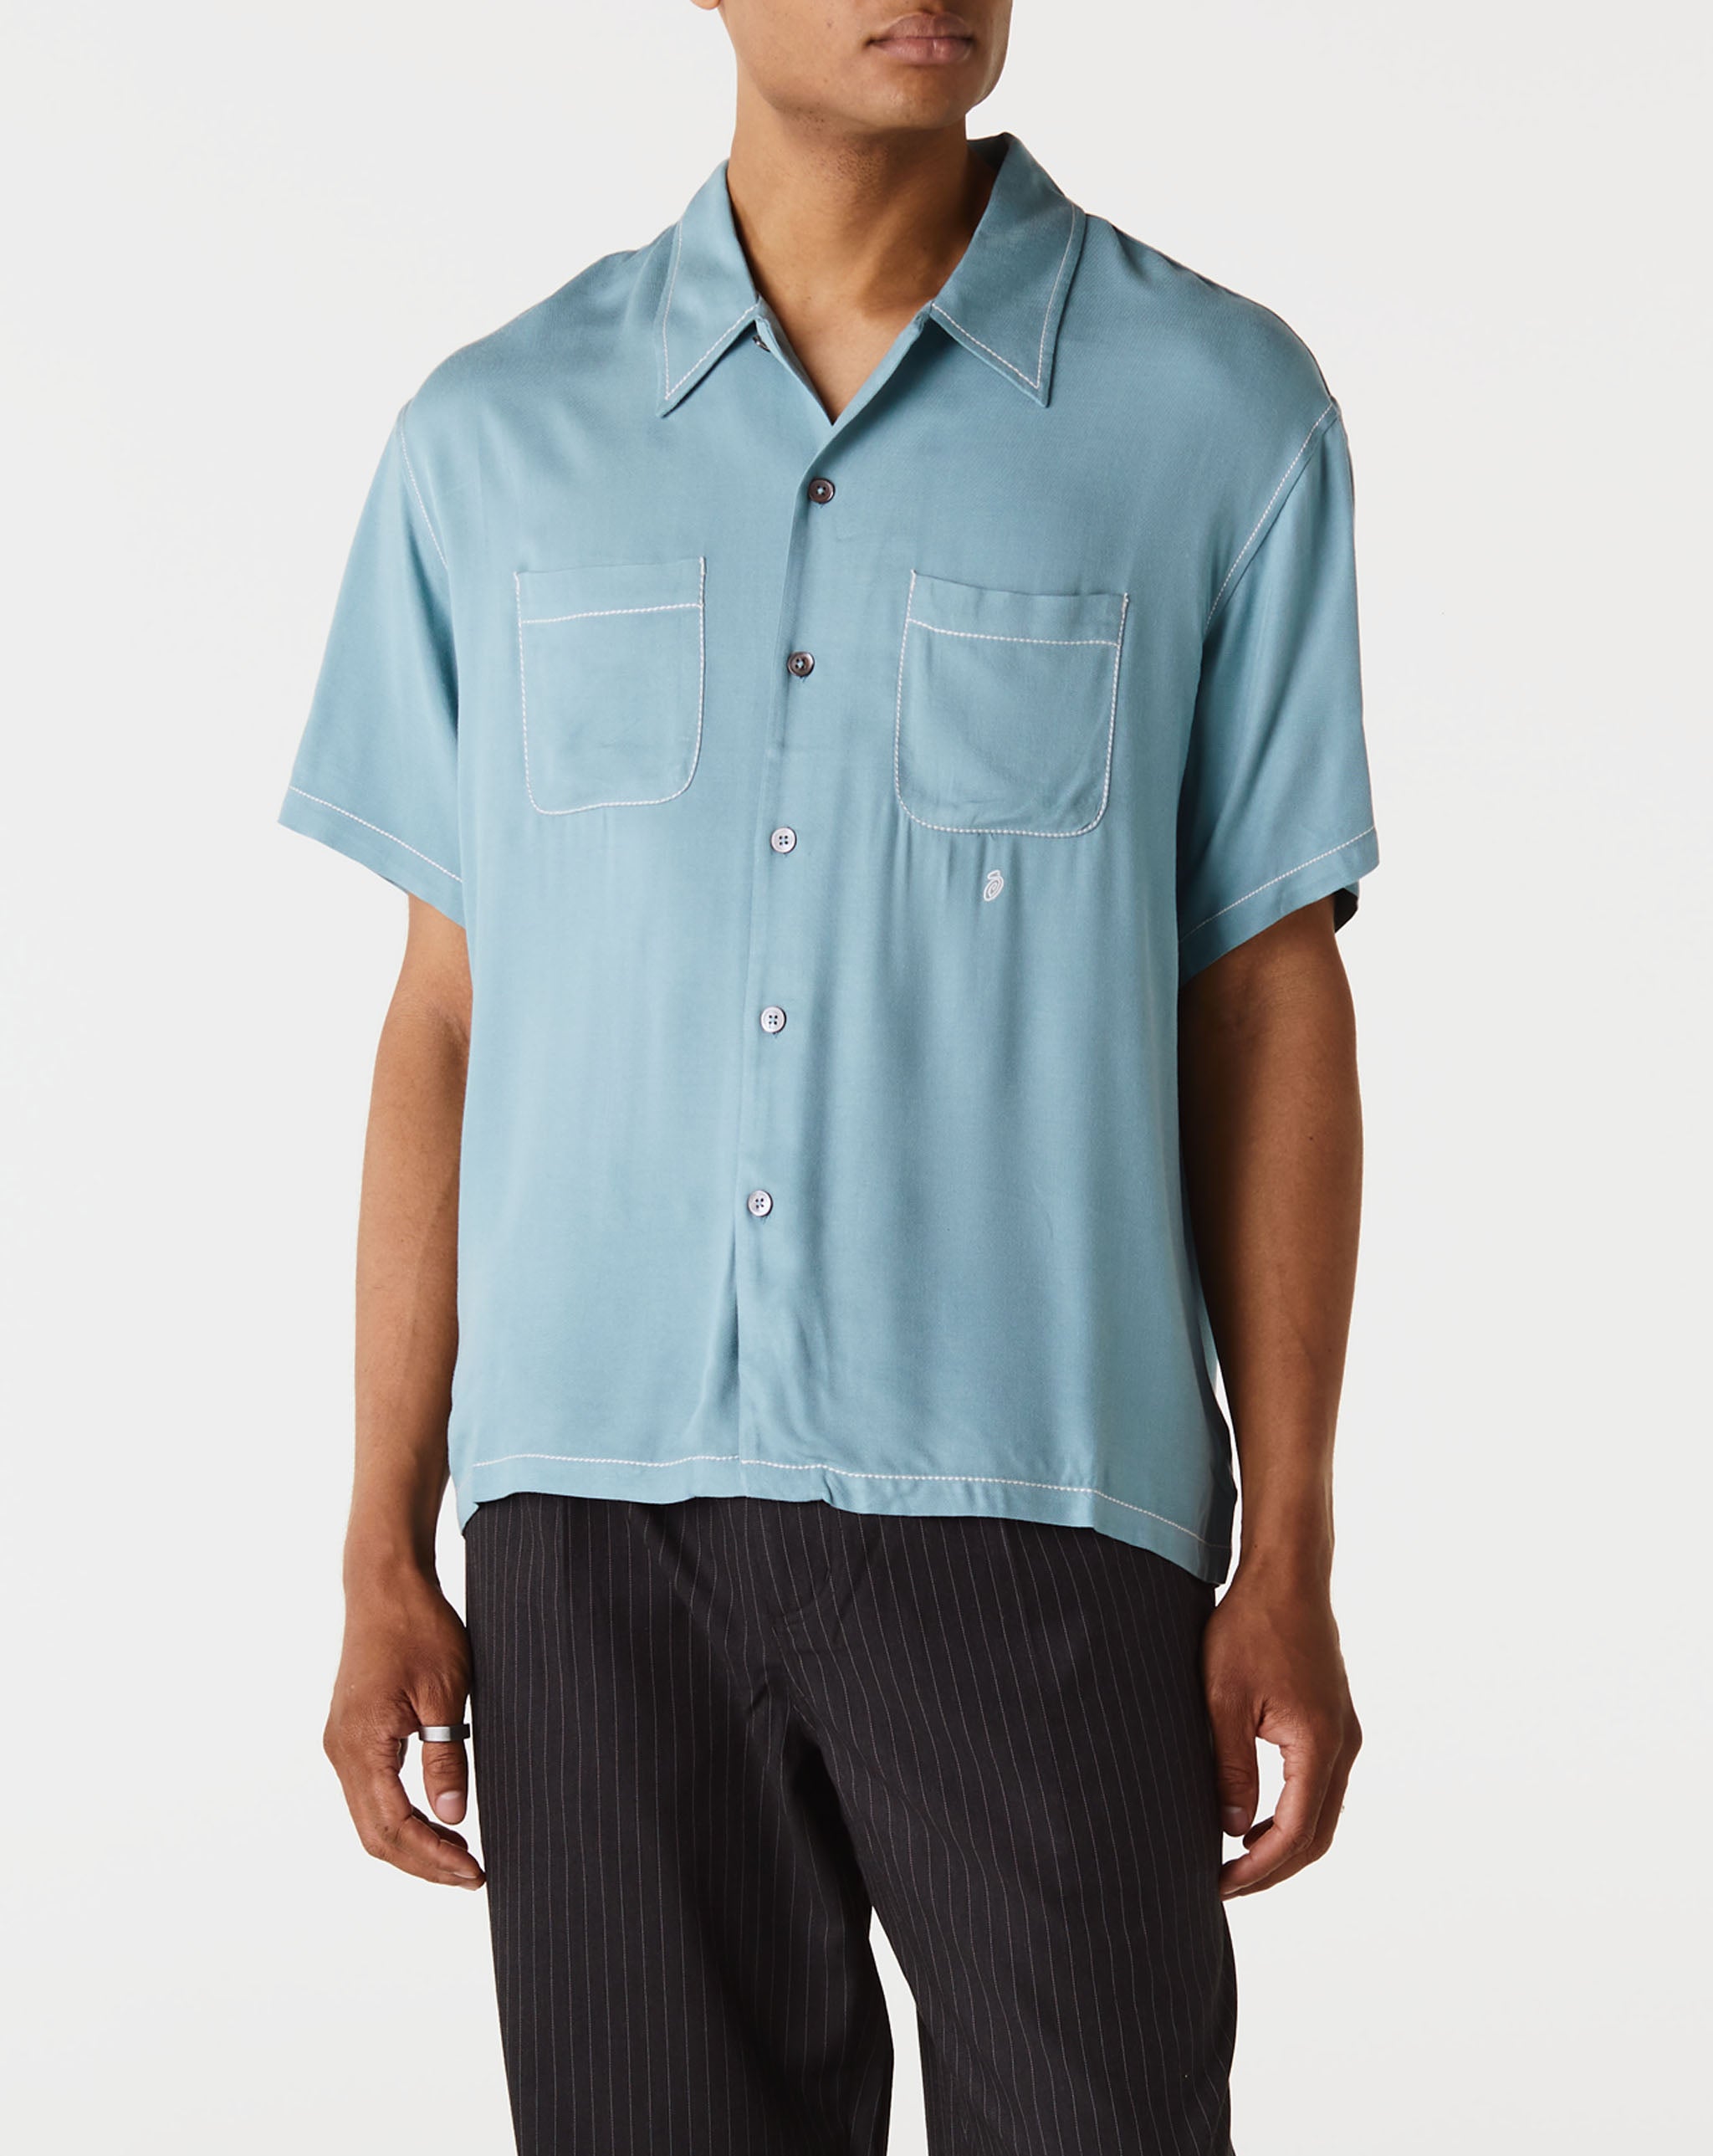 Contrast Stitched Shirt – Xhibition